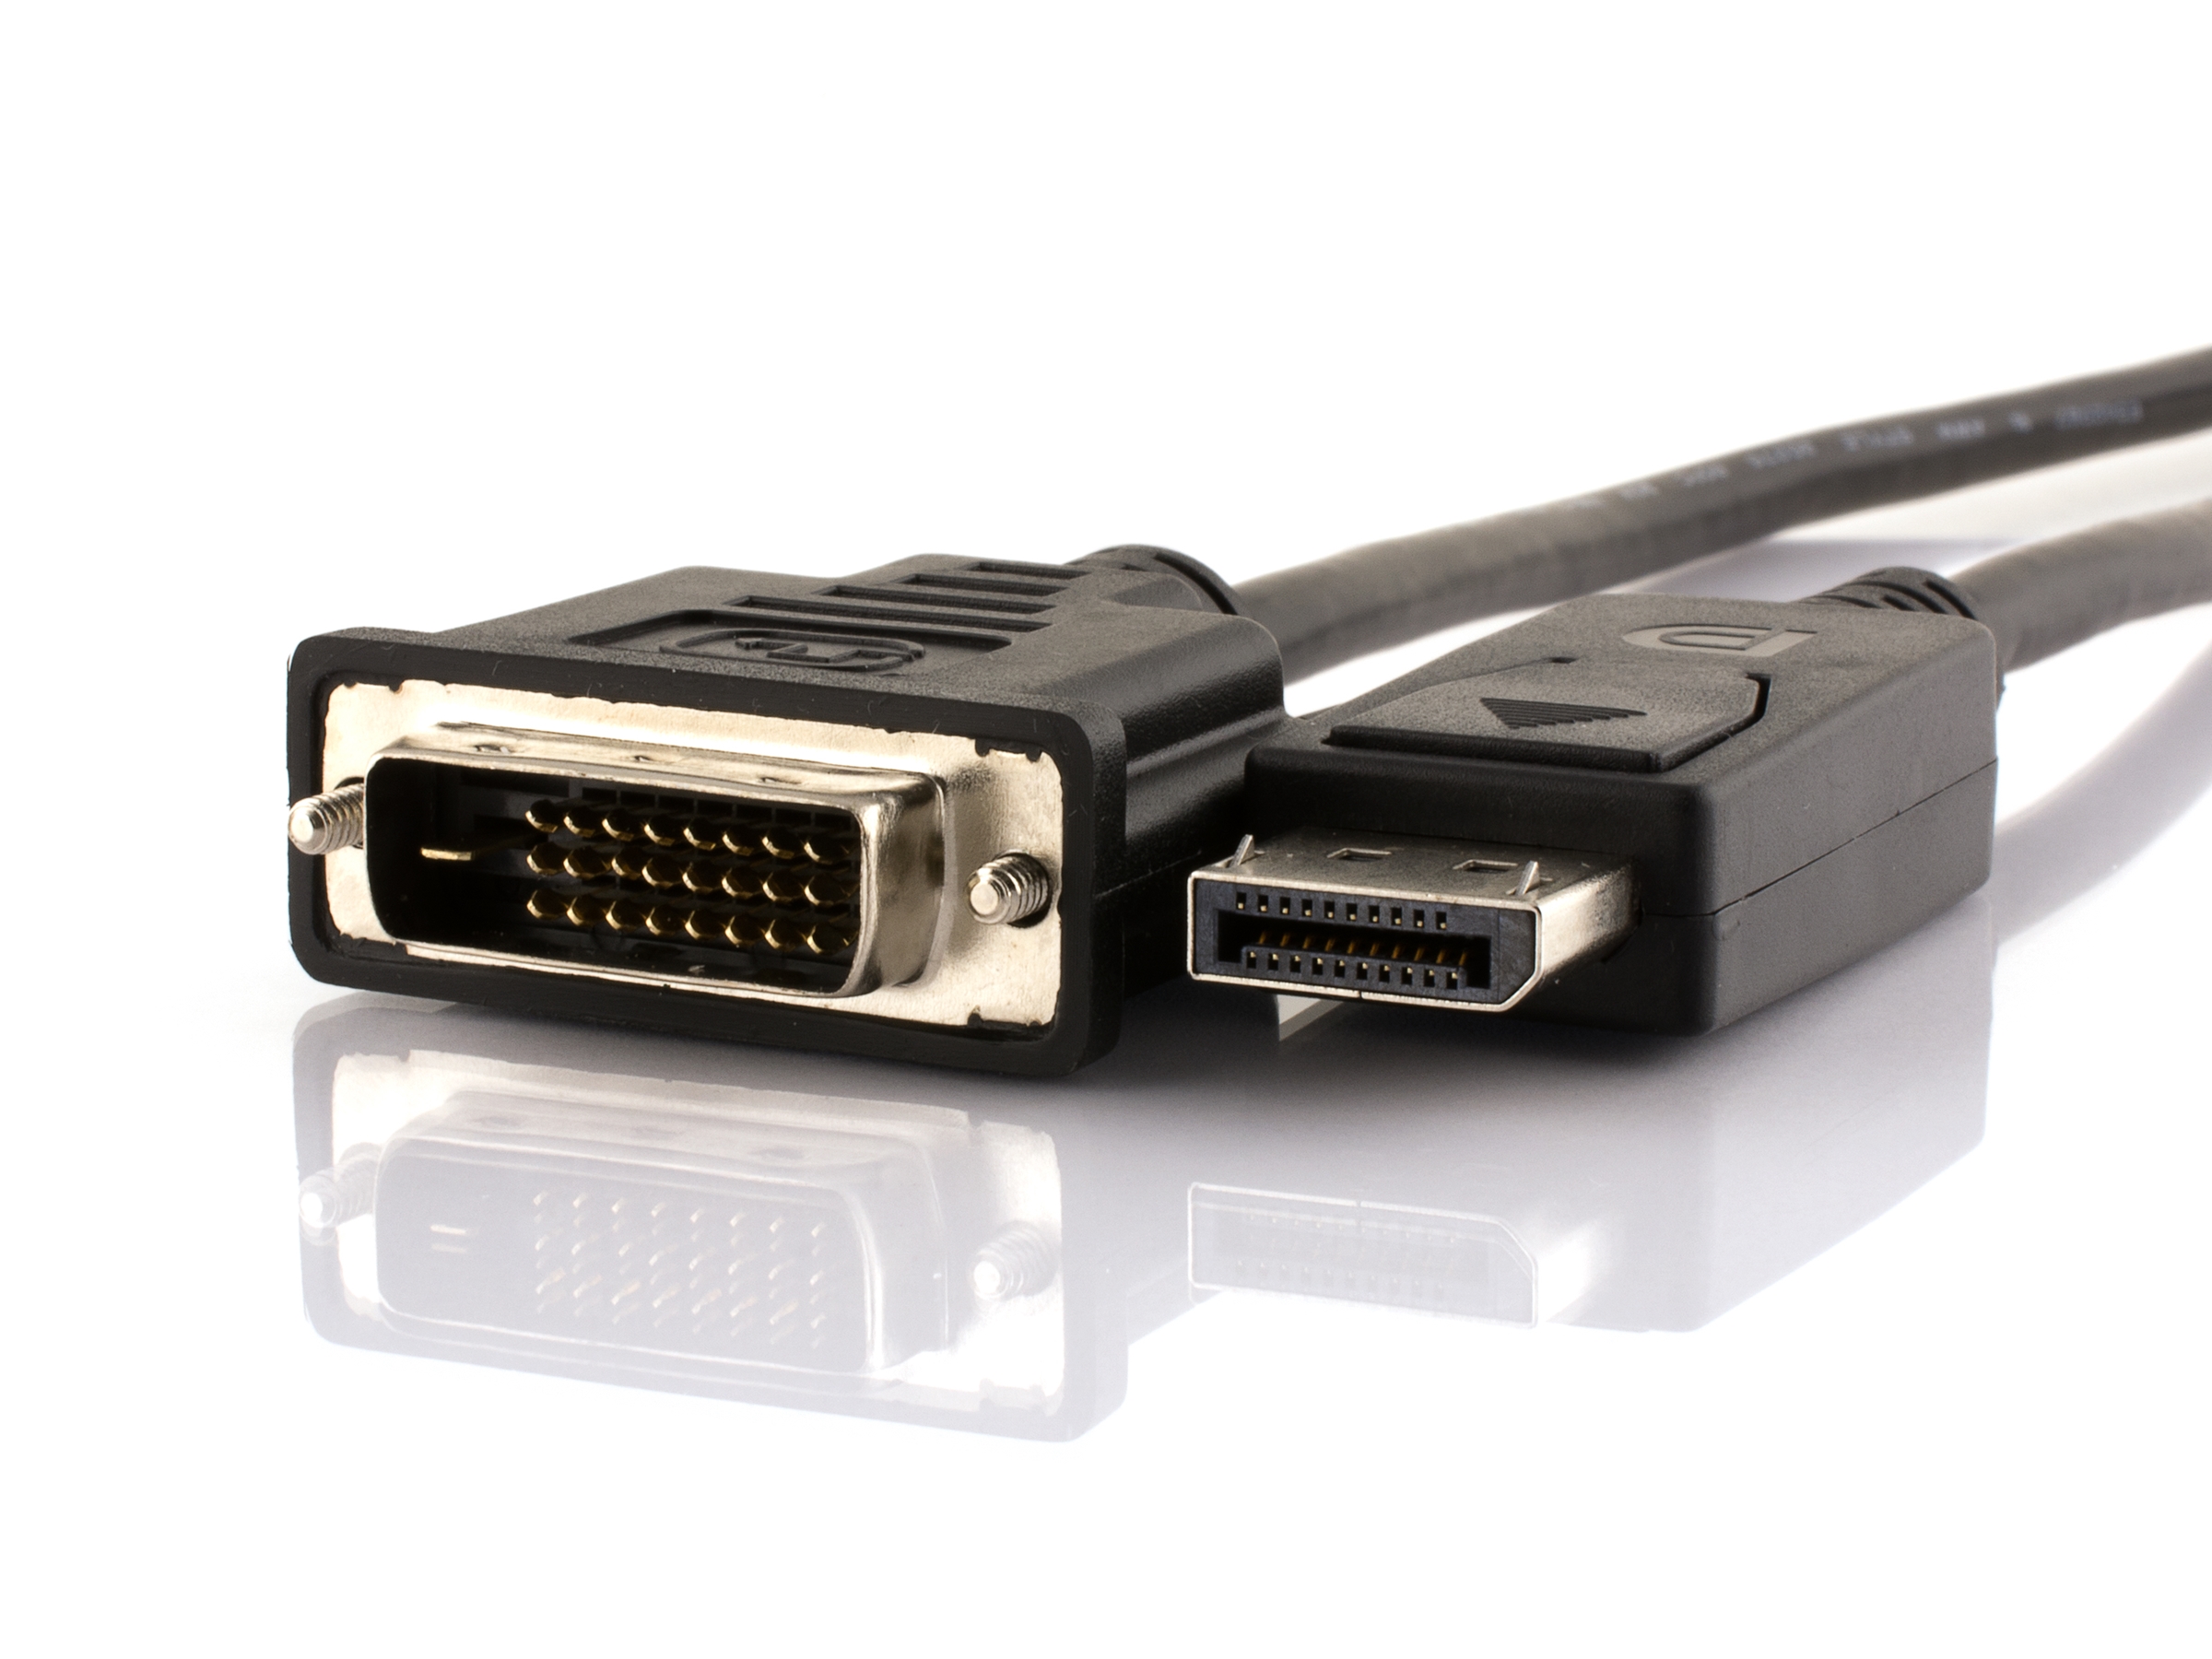 Vivid AV DisplayPort DVI Cable - 10 FT | Computer Cable Store